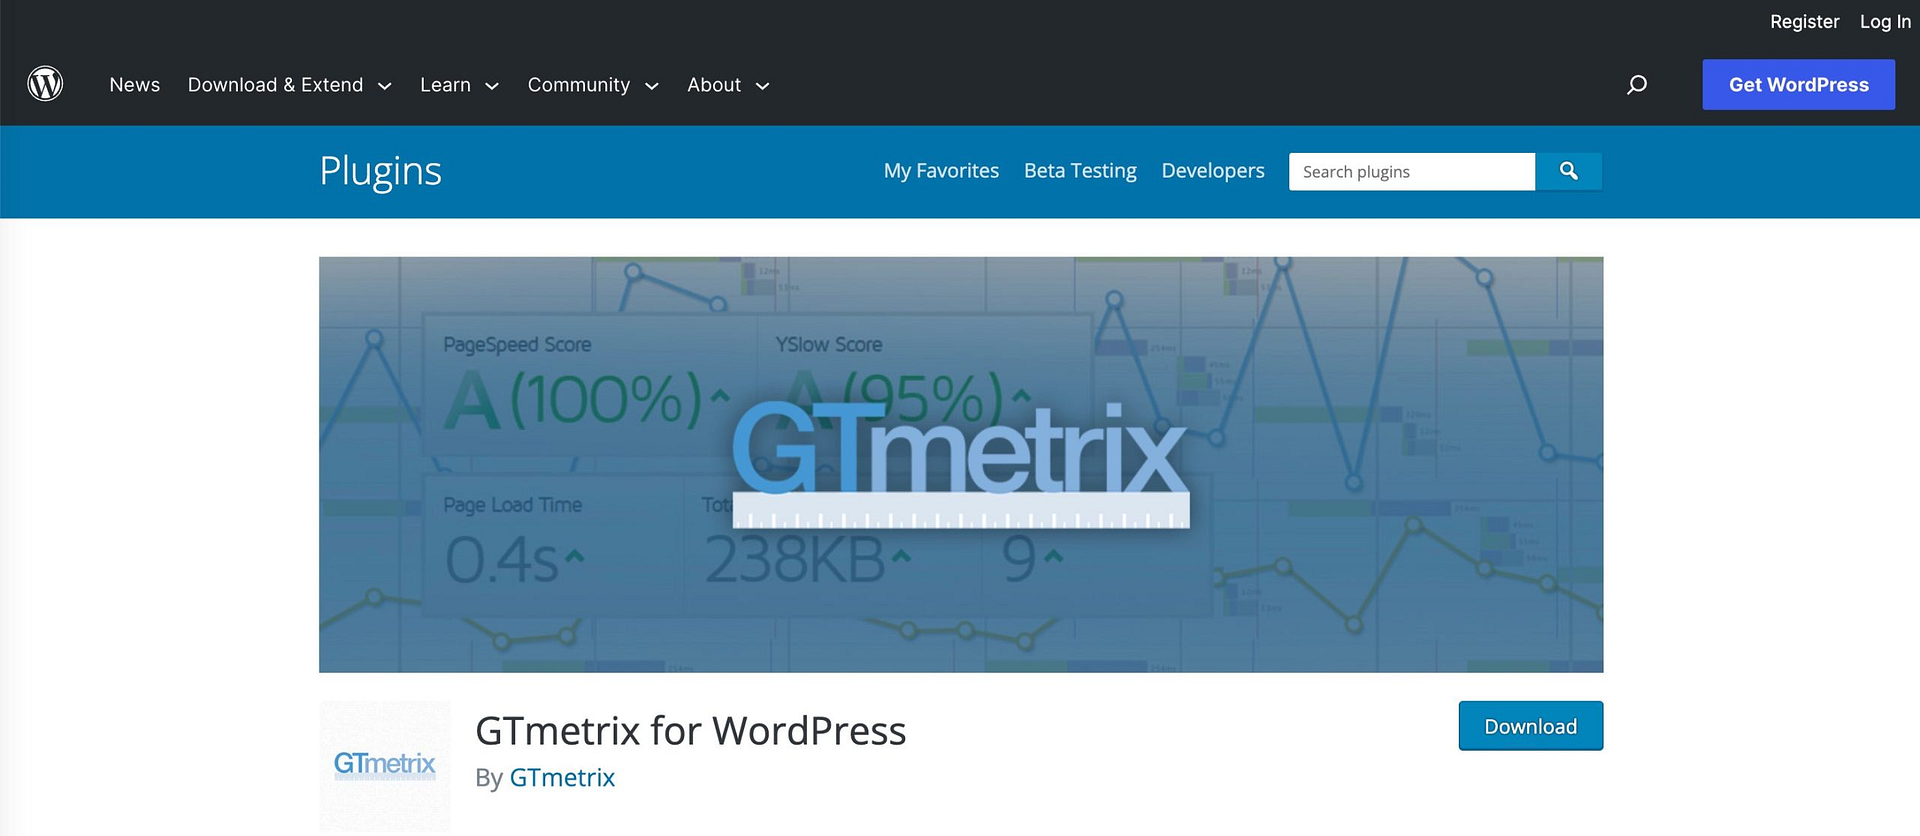 GTmetrix Result D, How to Improve it? - Website, Application, Performance  - Cloudflare Community